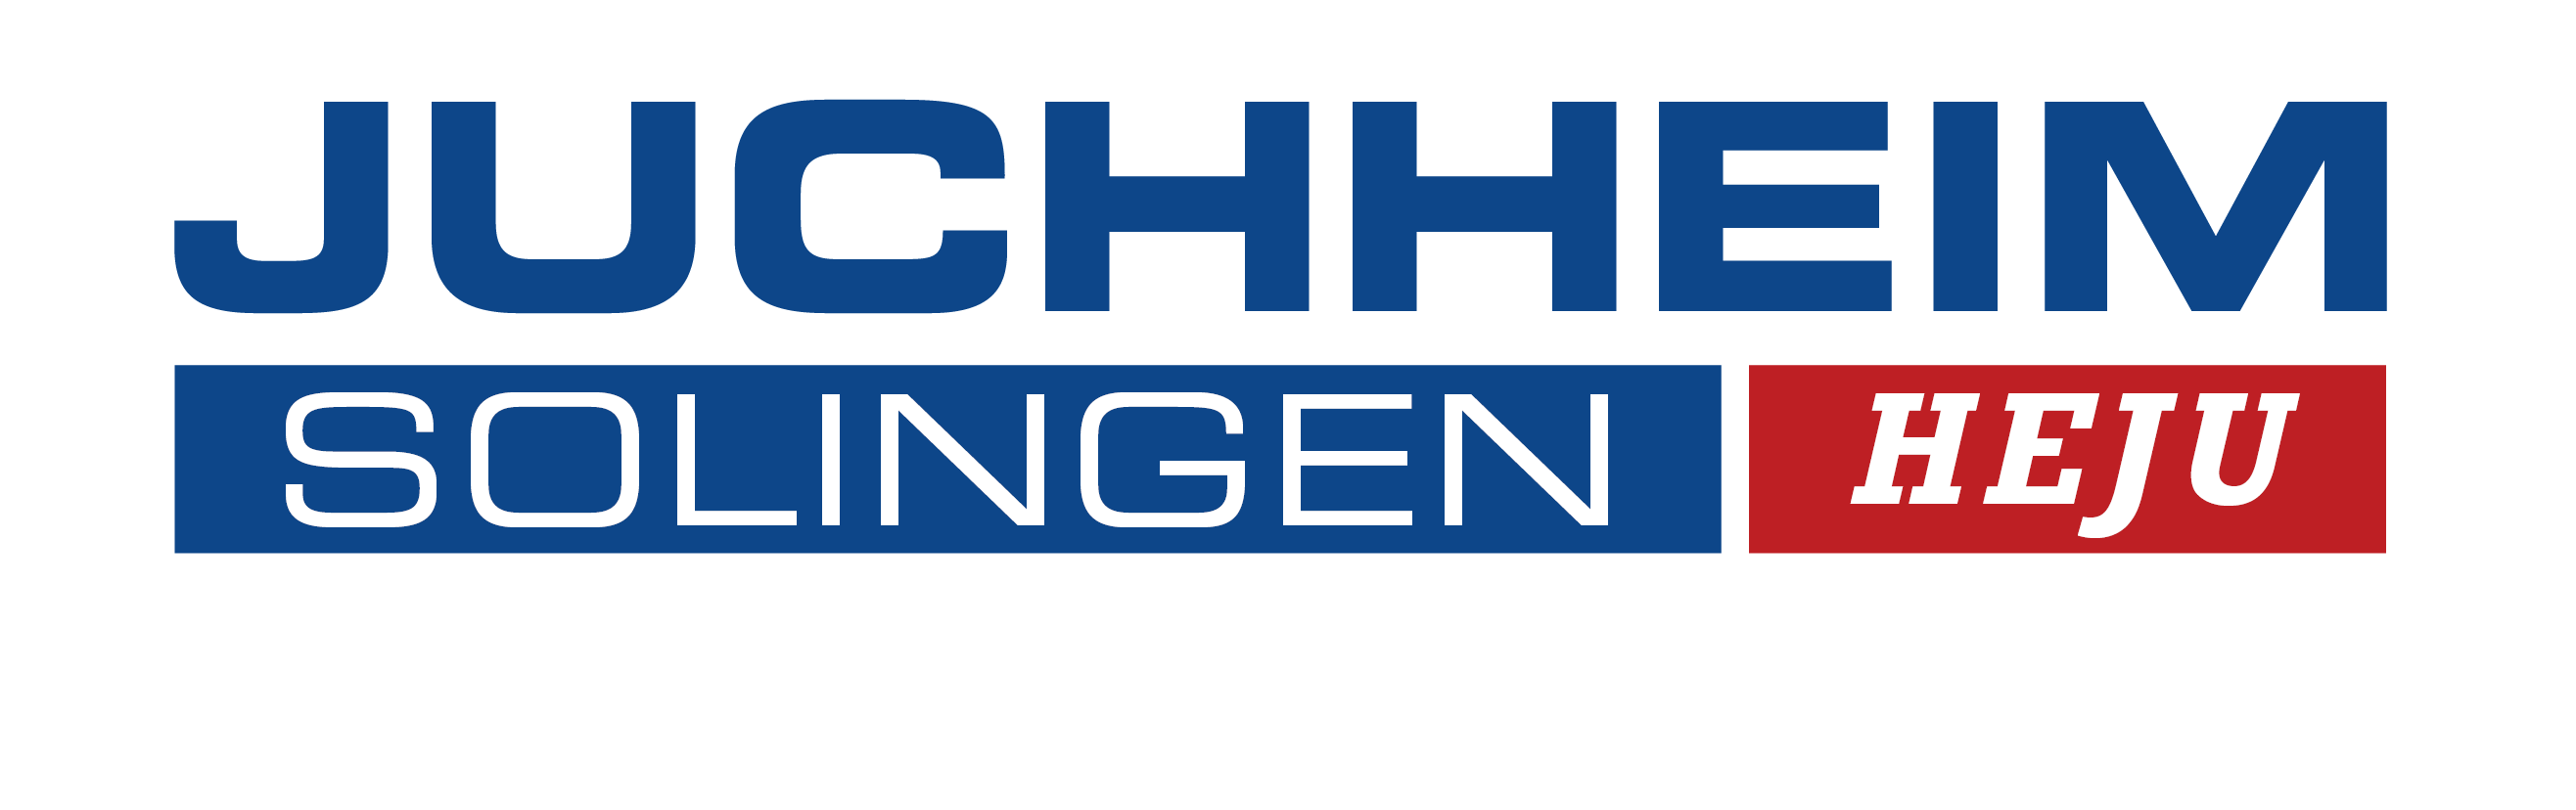 Juchheim GmbH & Co. KG